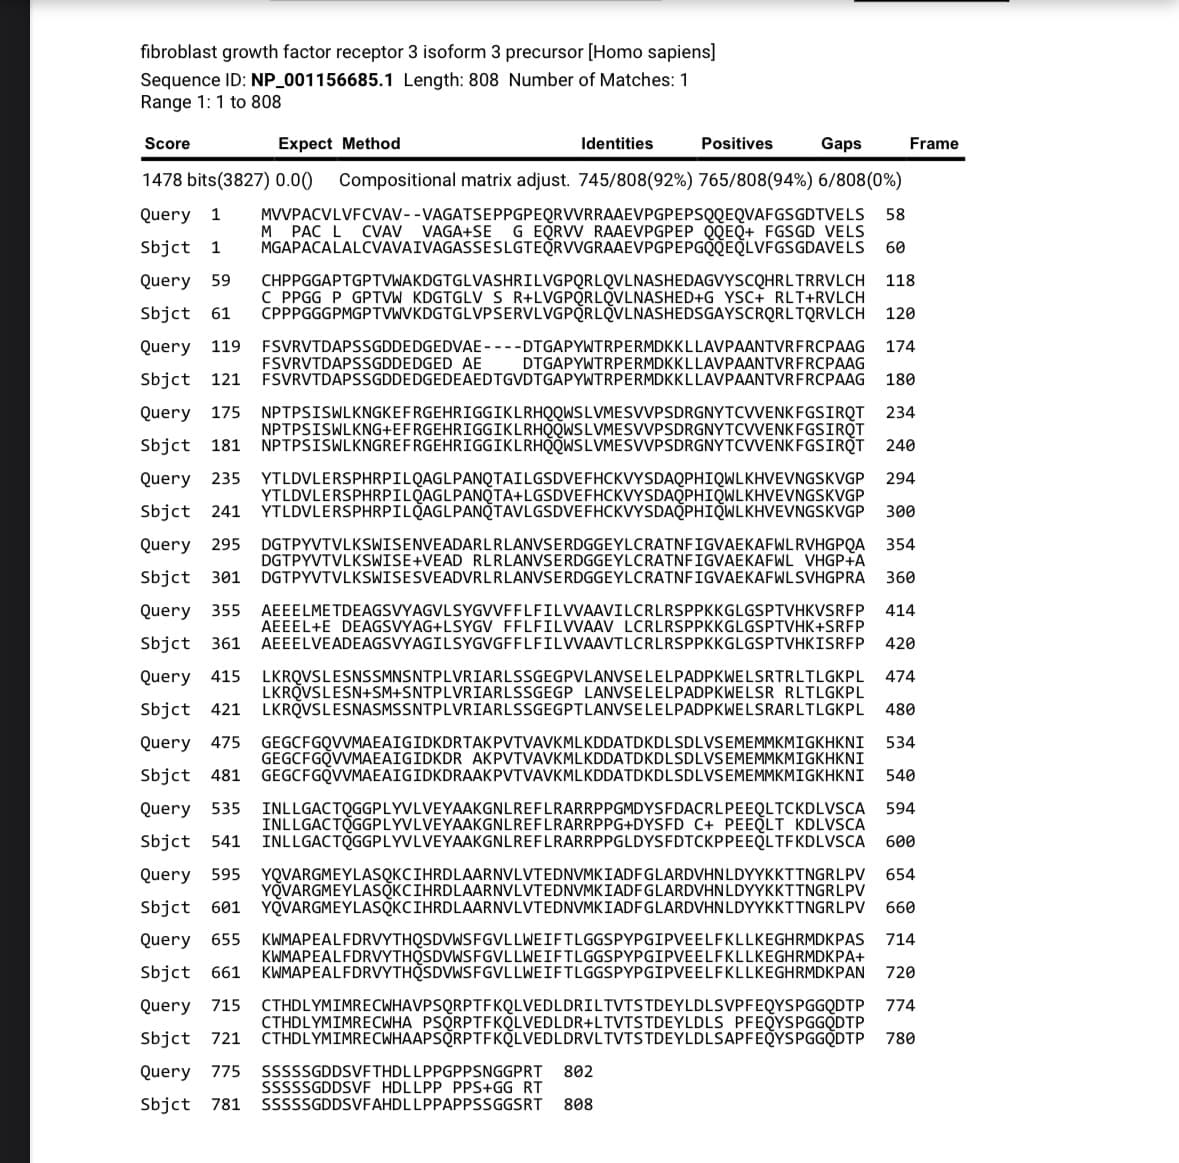 fibroblast growth factor receptor 3 isoform 3 precursor [Homo sapiens]
Sequence ID: NP_001156685.1 Length: 808 Number of Matches: 1
Range 1: 1 to 808
Score
Expect Method
Gaps
1478 bits(3827) 0.00) Compositional matrix adjust. 745/808(92%) 765/808(94%) 6/808 (0%)
VAGATSEPPGPEQRVVRRAAEVPGPEPSQQEQVAFGSGDTVELS 58
G EQRVV RAAEVPGPEP QQEQ+ FGSGD VELS
Sbjct 1 MGAPACALALCVAVAIVAGASSESLGTEQRVVGRAAEVPGPEPGOQEQLVFGSGDAVELS
60
Query 59
Sbjct 61
Query 119
CHPPGGAPTGPTVWAKDGTGLVASHRILVGPQRLQVLNASHEDAGVYSCQHRL TRRVLCH 118
C PPGG P GPTVW KDGTGLV S R+LVGPQRLQVLNASHED+G YSC+ RLT+RVLCH
CPPPGGGPMGPTVWVKDGTGLVPSERVLVGPORLOVLNASHEDSGAYSCRQRL TQRVLCH
120
Query 1 MVVPACVLVFCVAV--
M PAC L CVAV VAGA+SE
Identities
Positives
FSVRVTDAPSSGDDEDGEDVAE ----DTGAPYWTRPERMDKKLLAVPAANTVRFRCPAAG 174
FSVRVTDAPSSGDDEDGED AE DTGAPYWTRPERMDKKLLAVPAANTVRFRCPAAG
180
Sbjct 121
Query 175
Sbjct 181
234
240
Query
294
235 YTLDVLERSPHRPILQAGLPANQTAILGSDVEFHCKVYSDAQPHIQWLKHVEVNGSKVGP
YTLDVLERSPHRPILQAGLPANQTA+LGSDVEFHCKVYSDAQPHIQWLKHVEVNGSKVGP
Sbjct 241 YTLDVLERSPHRPILQAGLPANQTAVLGSDVEFHCKVYSDAQPHIQWLKHVEVNGSKVGP
Query 295
300
DGTPYVTVLKSWISENVEADARLRLANVSERDGGEYLCRATNFIGVAEKAFWLRVHGPQA
354
Sbjct 301
DGTPYVTVLKSWISESVEADVRLRLANVSERDGGEYLCRATNFIGVAEKAFWLSVHGPRA
360
Query 355 AEEELMETDEAGSVYAGVLSYGVVFFLFILVVAAVILCRLRSPPKKGLGSPTVHKVSRFP 414
AEEEL+E DEAGSVYAG+LSYGV FFLFILVVAAV LCRLRSPPKKGLGSPTVHK+SRFP
Sbjct 361 AEEELVEADEAGSVYAGILSYGVGFFLFILVVAAVTLCRLRSPPKKGLGSPTVHKISRFP 420
474
LKRQVSLESNSSMNSNTPLVRIARLSSGEGPVLANVSELELPADPKWELSRTRLTLGKPL
Query 415
Sbjct 421
480
Query 475 GEGCFGQVVMAEAIGIDKDRTAKPVTVAVKMLKDDATDKDLSDLVSEMEMMKMIGKHKNI 534
GEGCFGQVVMAEAIGIDKDR AKPVTVAVKMLKDDATDKDLSDLVS EMEMMKMIGKHKNI
GEGCFGQVVMAEAIGIDKDRAAKPVTVAVKMLKDDATDKDLSDLVSEMEMMKMIGKHKNI 540
Sbjct 481
Query 535
Sbjct 541
Query 595
INLLGACTQGGPLYVLVEYAAKGNLREFLRARRPPGMDYSFDACRL PEEQLTCKDLVSCA 594
INLLGACTOGGPLYVLVEYAAKGNLREFLRARRPPG+DYSFD C+ PEEQLT KDLVSCA
INLLGACTQGGPLYVLVEYAAKGNLREFLRARRPPGLDYSFDTCKPPEEQLTFKDLVSCA 600
YQVARGMEYLASQKCIHRDLAARNVLV ONVMKIADFGLARDVHNLDYYKKT TNGRLPV 654
Sbjct 601
YQVARGMEYLASQKCIHRDLAARNVLVTEDNVMKIADFGLARDVHNLDYYKKTTNGRLPV
YQVARGMEYLASQKCIHRDLAARNVLVTEDNVMKIADFGLARDVHNLDYYKKTTNGRLPV 660
KWMAPEALFDRVYTHQSDVWSFGVLLWEIFTLGGSPYPGIPVEELFKL LKEGHRMDKPAS 714
720
Query 655
Sbjct 661
FSVRVTDAPSSGDDEDGEDEAEDTGVDTGAPYWTRPERMDKKLLAVPAANTVRFRCPAAG
NPTPSISWLKNGKEFRGEHRIGGIKLRHQQWSLVMESVVPSDRGNYTCVVENKFGSIRQT
NPTPSISWLKNG+EFRGEHRIGGIKLRHQQWSLVMESVVPSDRGNYTCVVENKFGSIRQT
NPTPSISWLKNGREFRGEHRIGGIKLRHQQWSLVMESVVPSDRGNYTCVVENKFGSIRQT
DGTPYVTVLKSWISE+VEAD RLRLANVSERDGGEYLCRATNFIGVAEKAFWL VHGP+A
LKROVSLESN+SM+SNTPLVRIARLSSGEGP LANVSELELPADPKWELSR RLTLGKPL
LKRQVSLESNASMSSNTPLVRIARLSSGEGPTLANVSE LELPADPKWELSRARLTLGKPL
Frame
SSSSSGDDSVF THDL LPPGPPSNGGPRT 802
SSSSSGDDSVF HDLLPP PPS+GG RT
SSSSSGDDSVFAHDL LPPAPPSSGGSRT
808
KWMAPEALFDRVYTHQSDVWSFGVLLWEIFTLGGSPYPGIPVEELFKLLKEGHRMDKPA+
KWMAPEALFDRVYTHOSDVWSFGVLLWEIFTLGGSPYPGIPVEELFKLLKEGHRMDKPAN
Query 715 CTHDLYMIMRECWHAVPSQRPTFKQLVEDLDRILTVTSTDEYLDLSVPFEQYSPGGQDTP 774
CTHDLYMIMRECWHA PSQRPTFKQLVEDLDR+LTVTSTDEYLDLS PFEQYSPGGQDTP
CTHDLYMIMRECWHAAPSORPTFKOLVEDLDRVLTVTSTDEYLDLSAPFEQYSPGGQDTP 780
Sbjct 721
Query 775
Sbjct 781